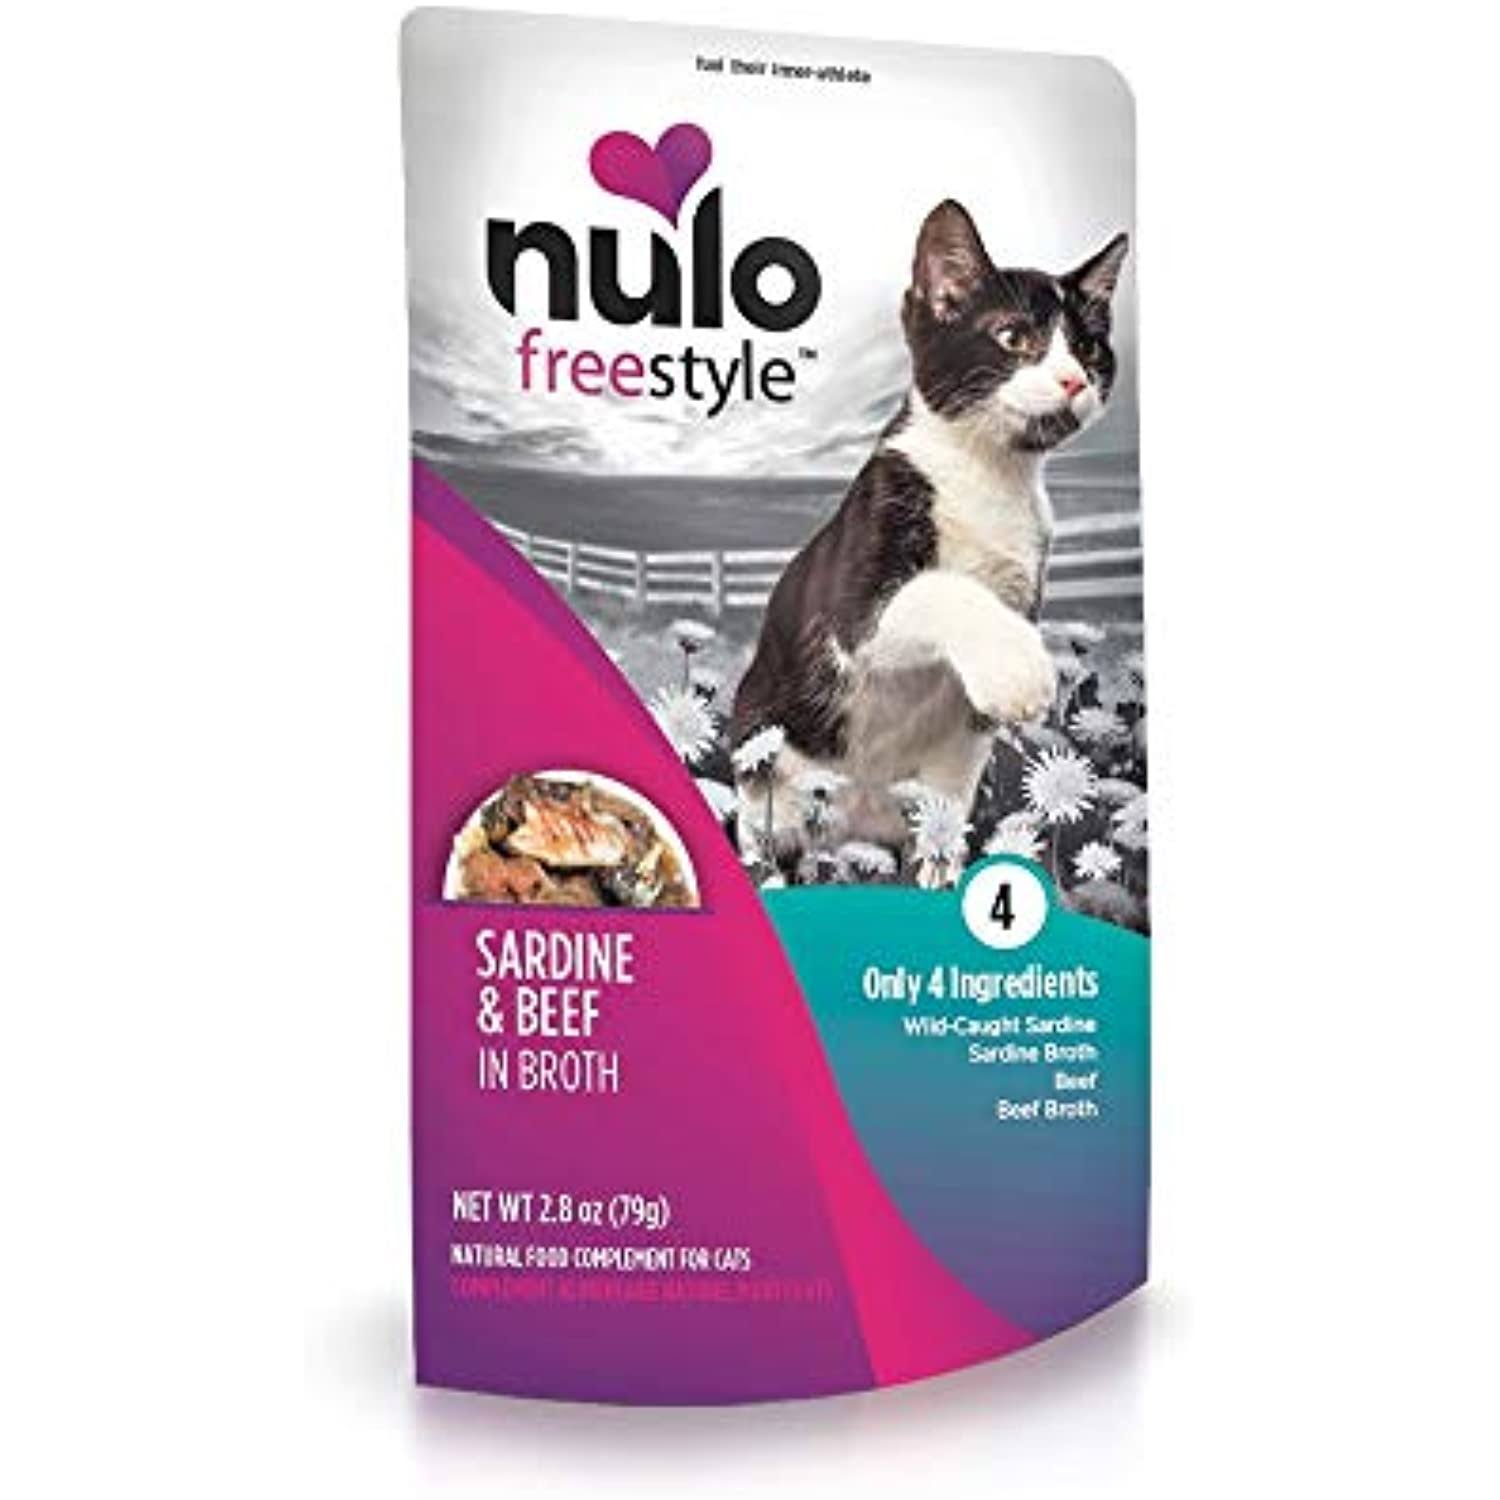 Nulo Freestyle Sardine & Beef in Broth Wet Cat Food, 2.8 oz